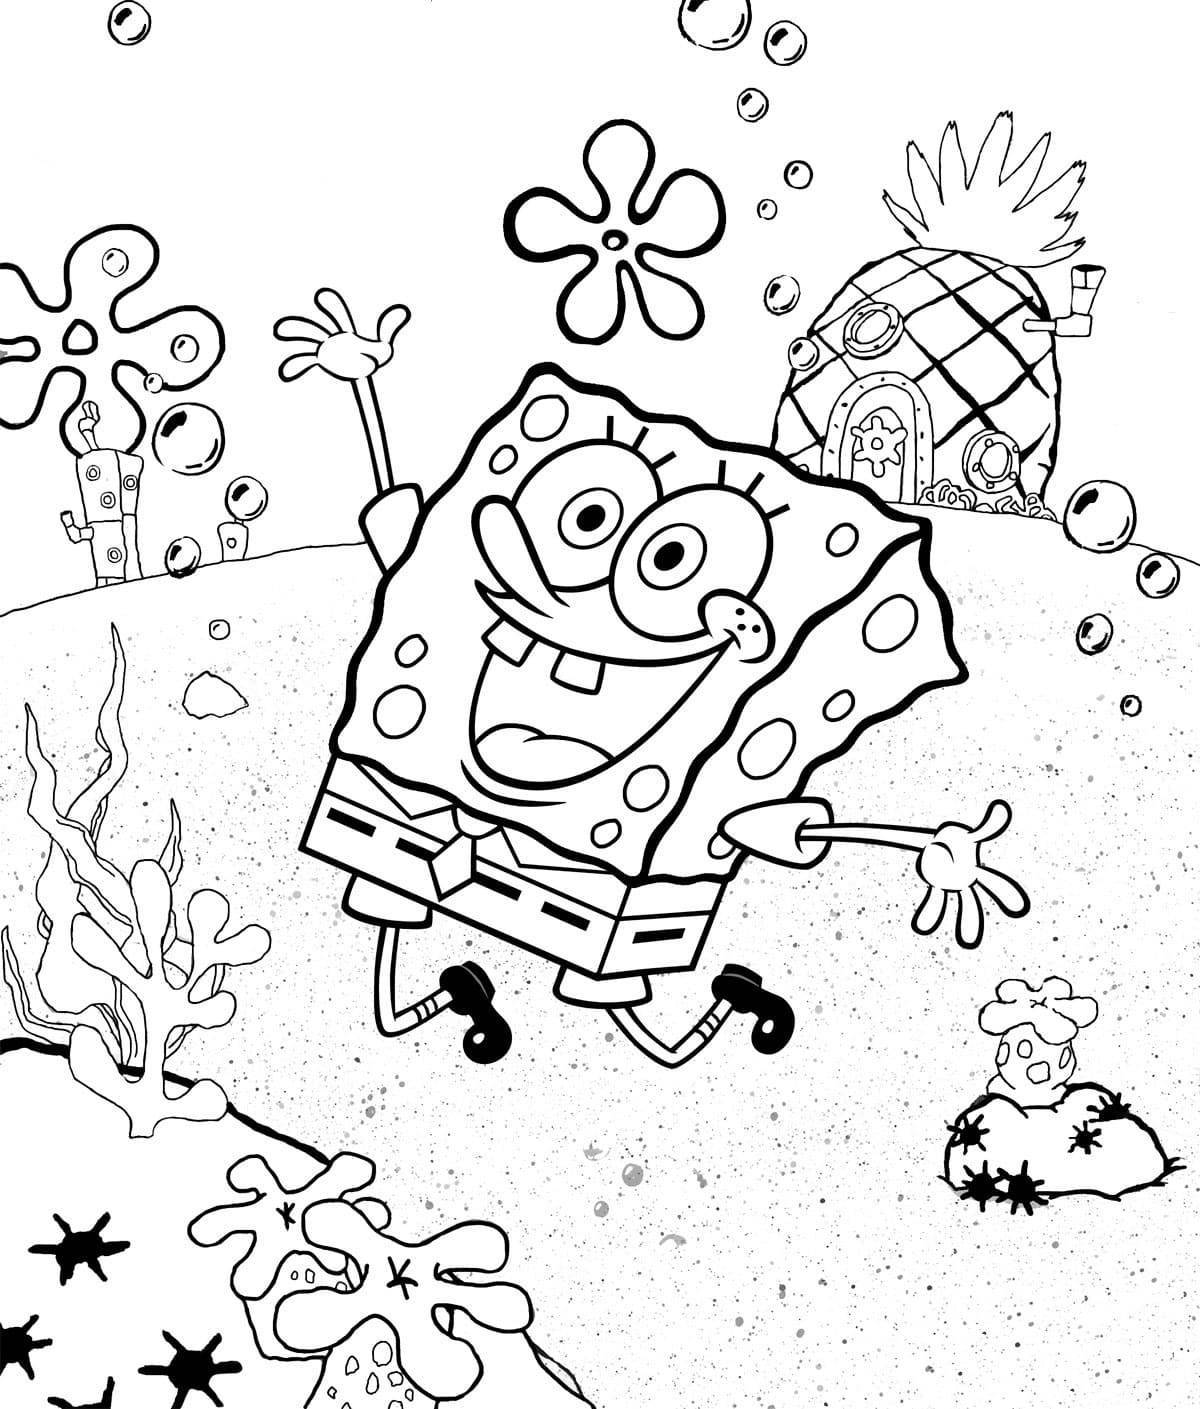 Bright spongebob and his friends